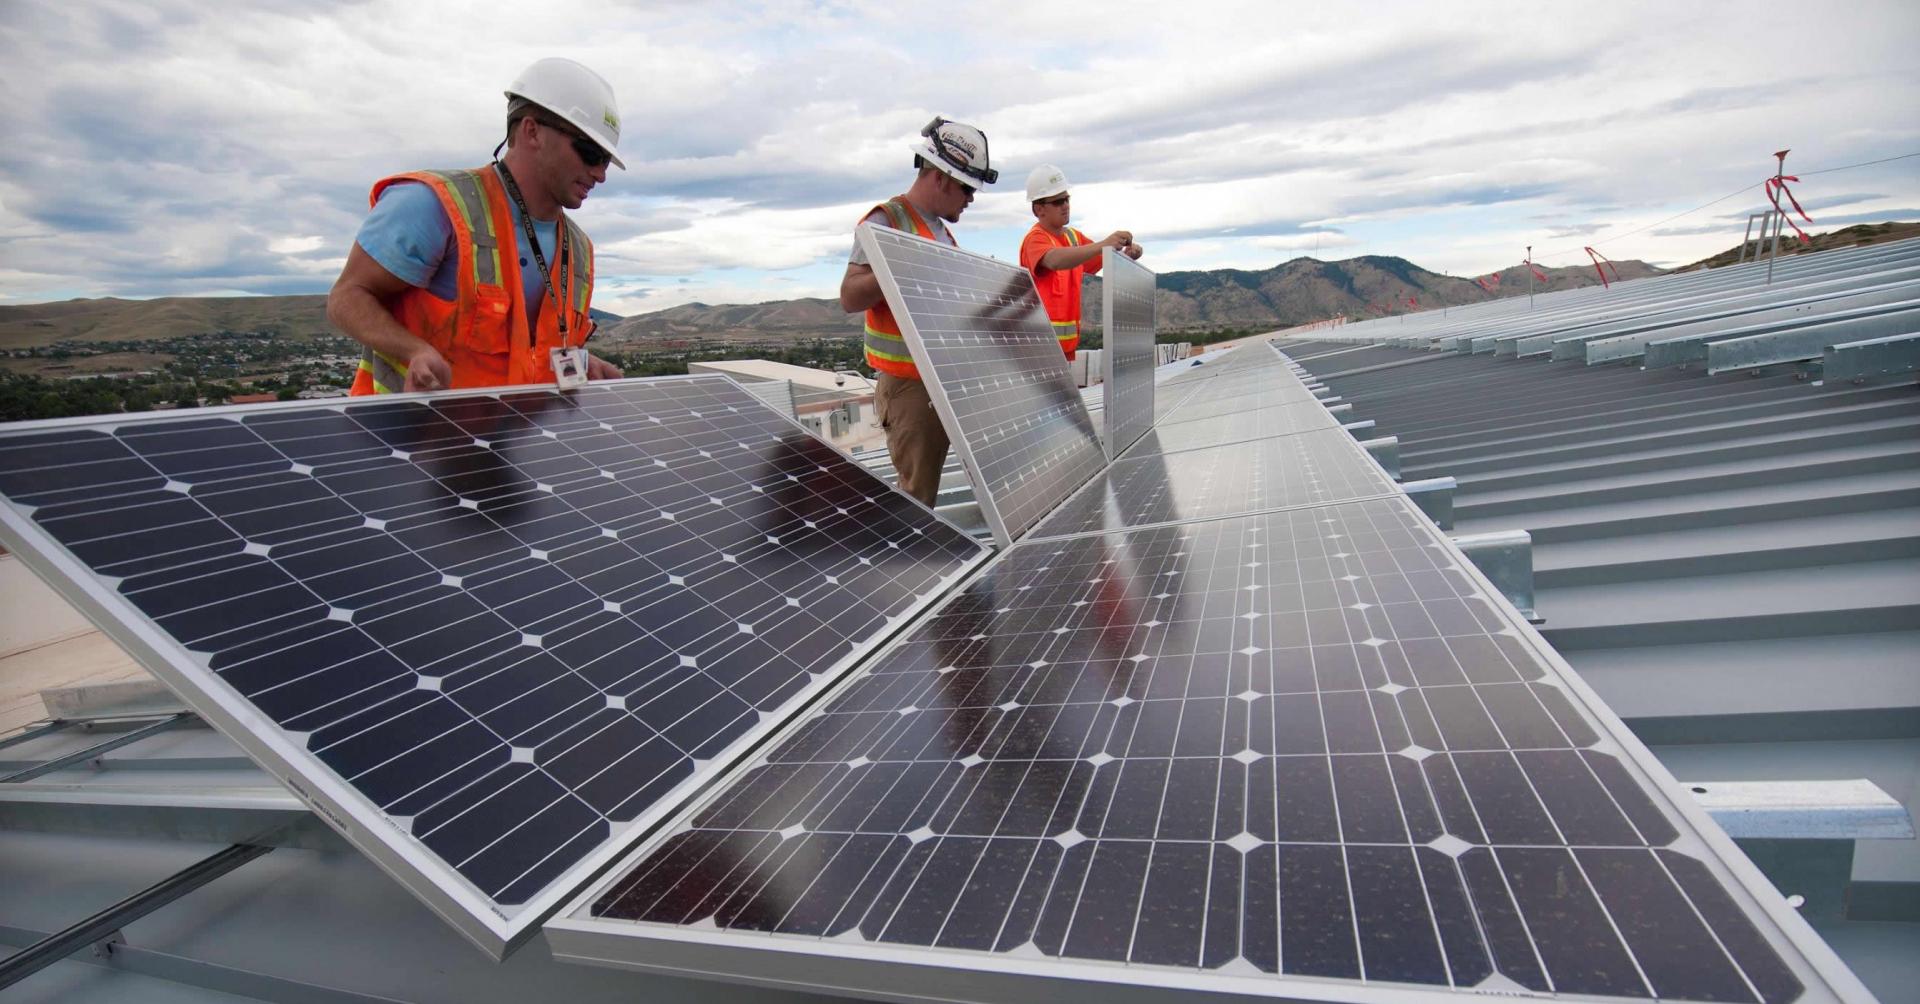 Solar workers installing solar panels